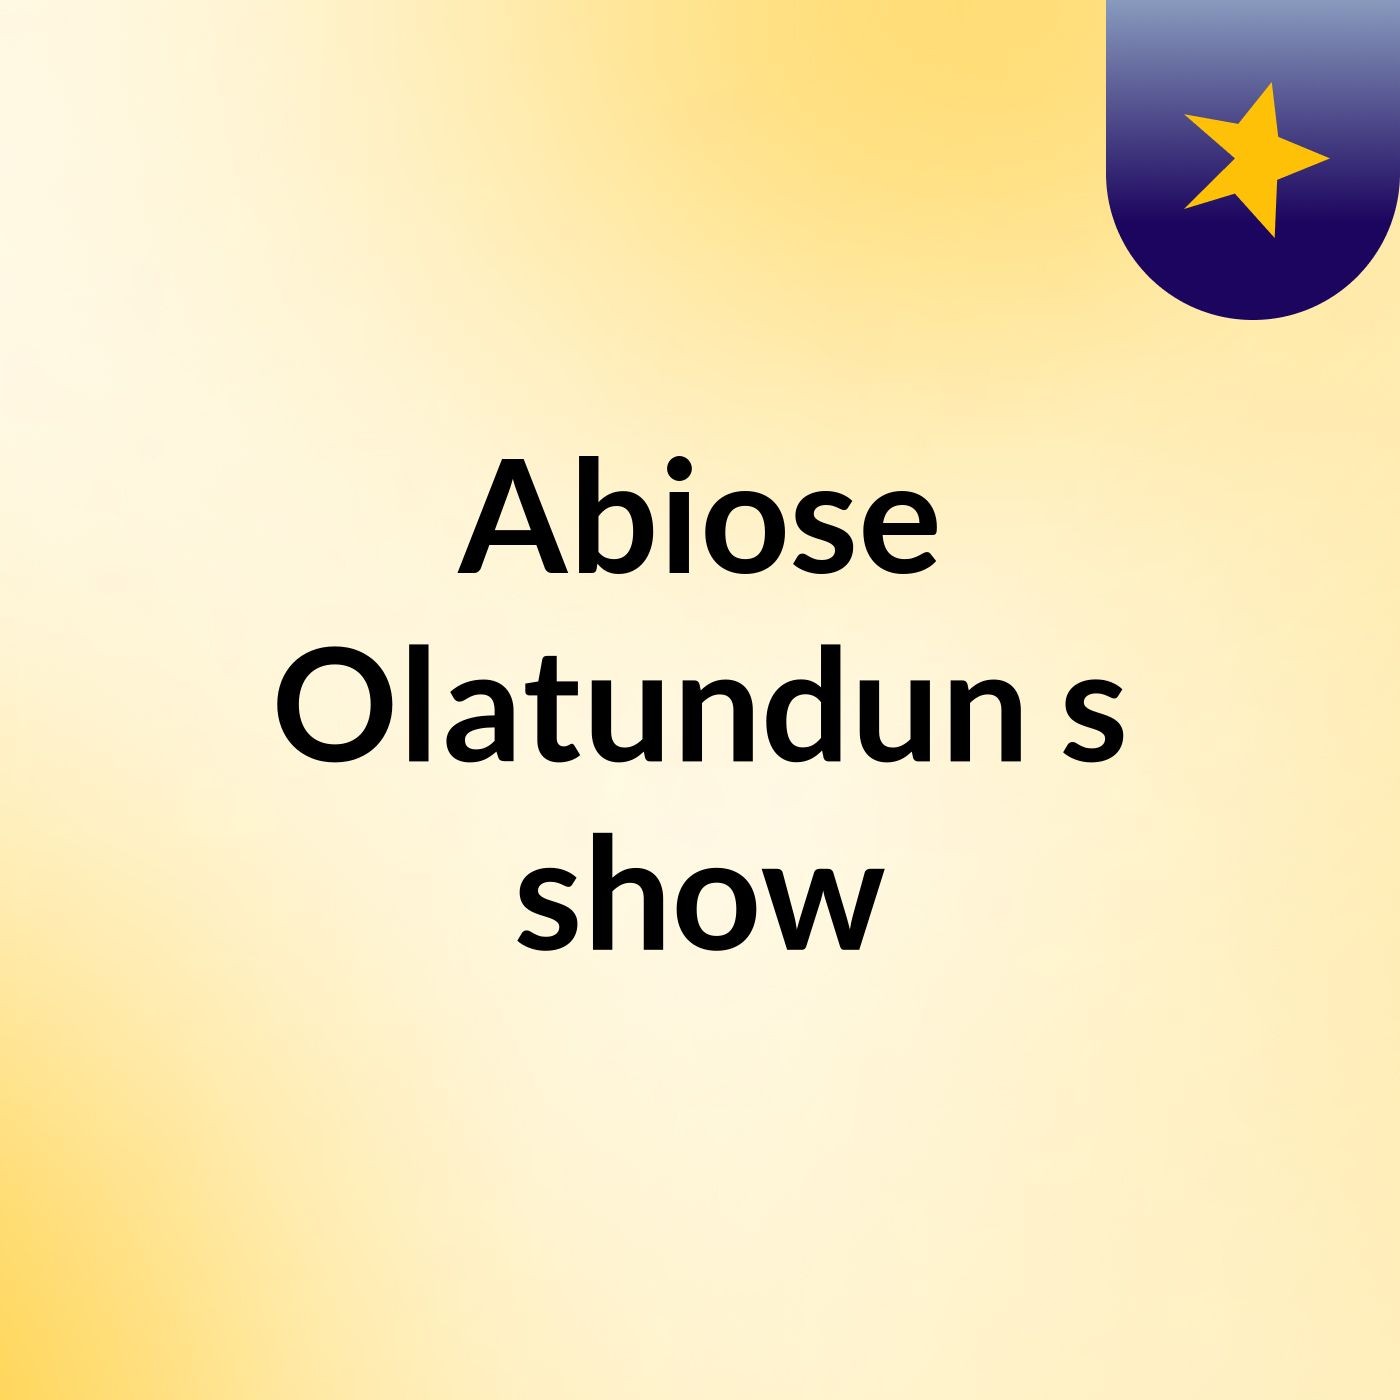 Abiose Olatundun's show